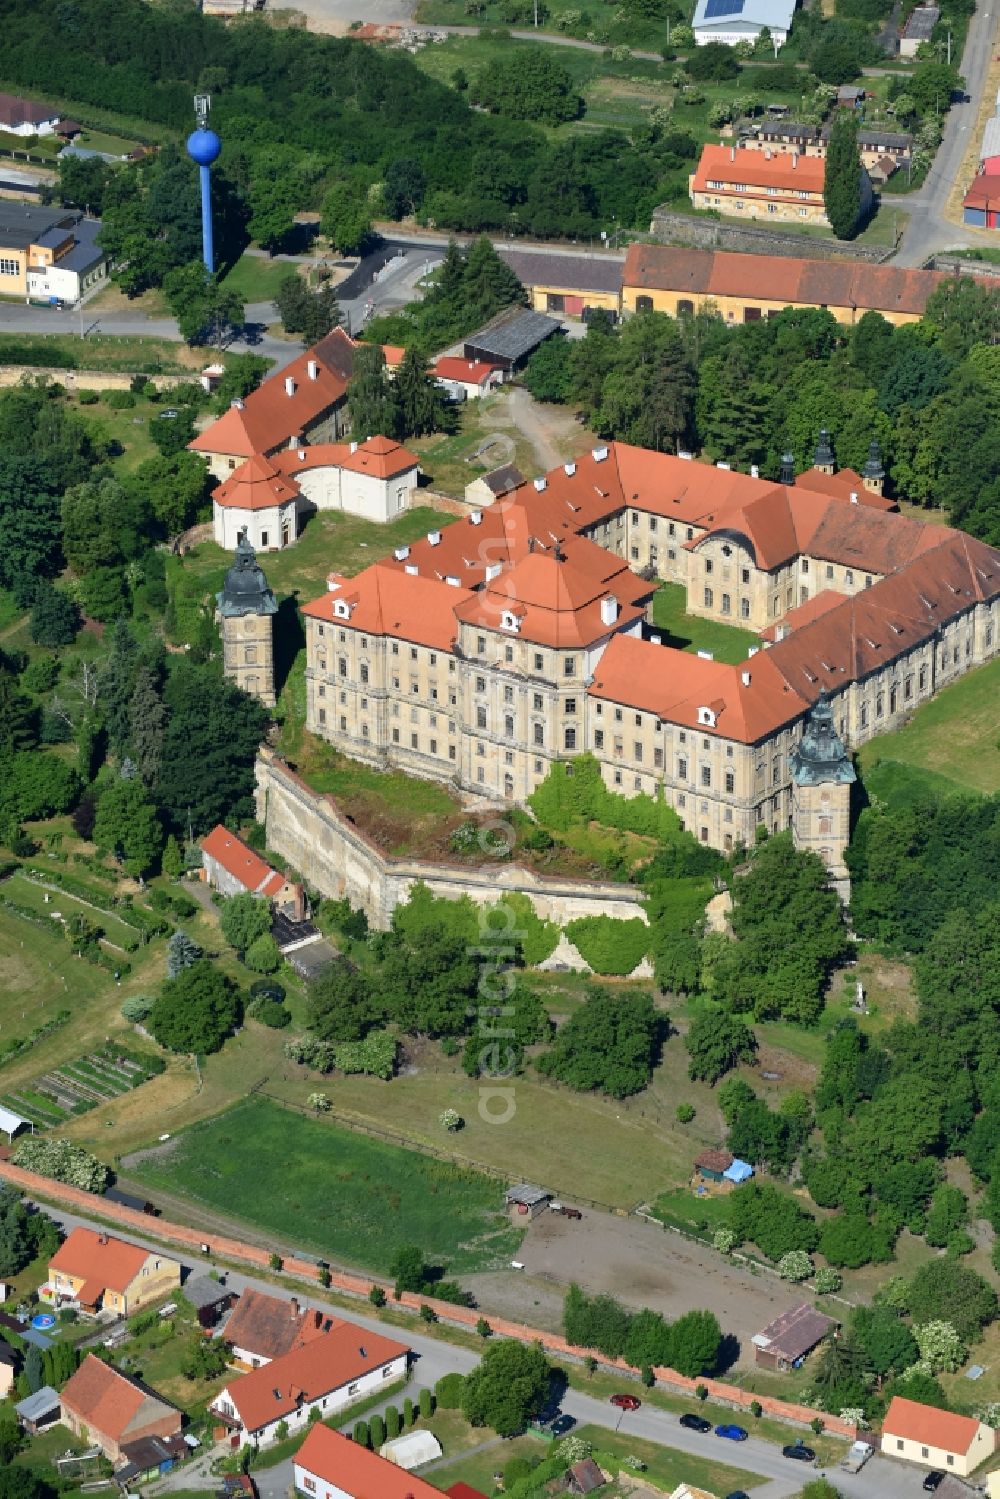 Aerial image Chotesov - Complex of buildings of the cloister of Chotieschau in Chotesov in Plzensky kraj - Pilsner region - Bohemia, Czechia